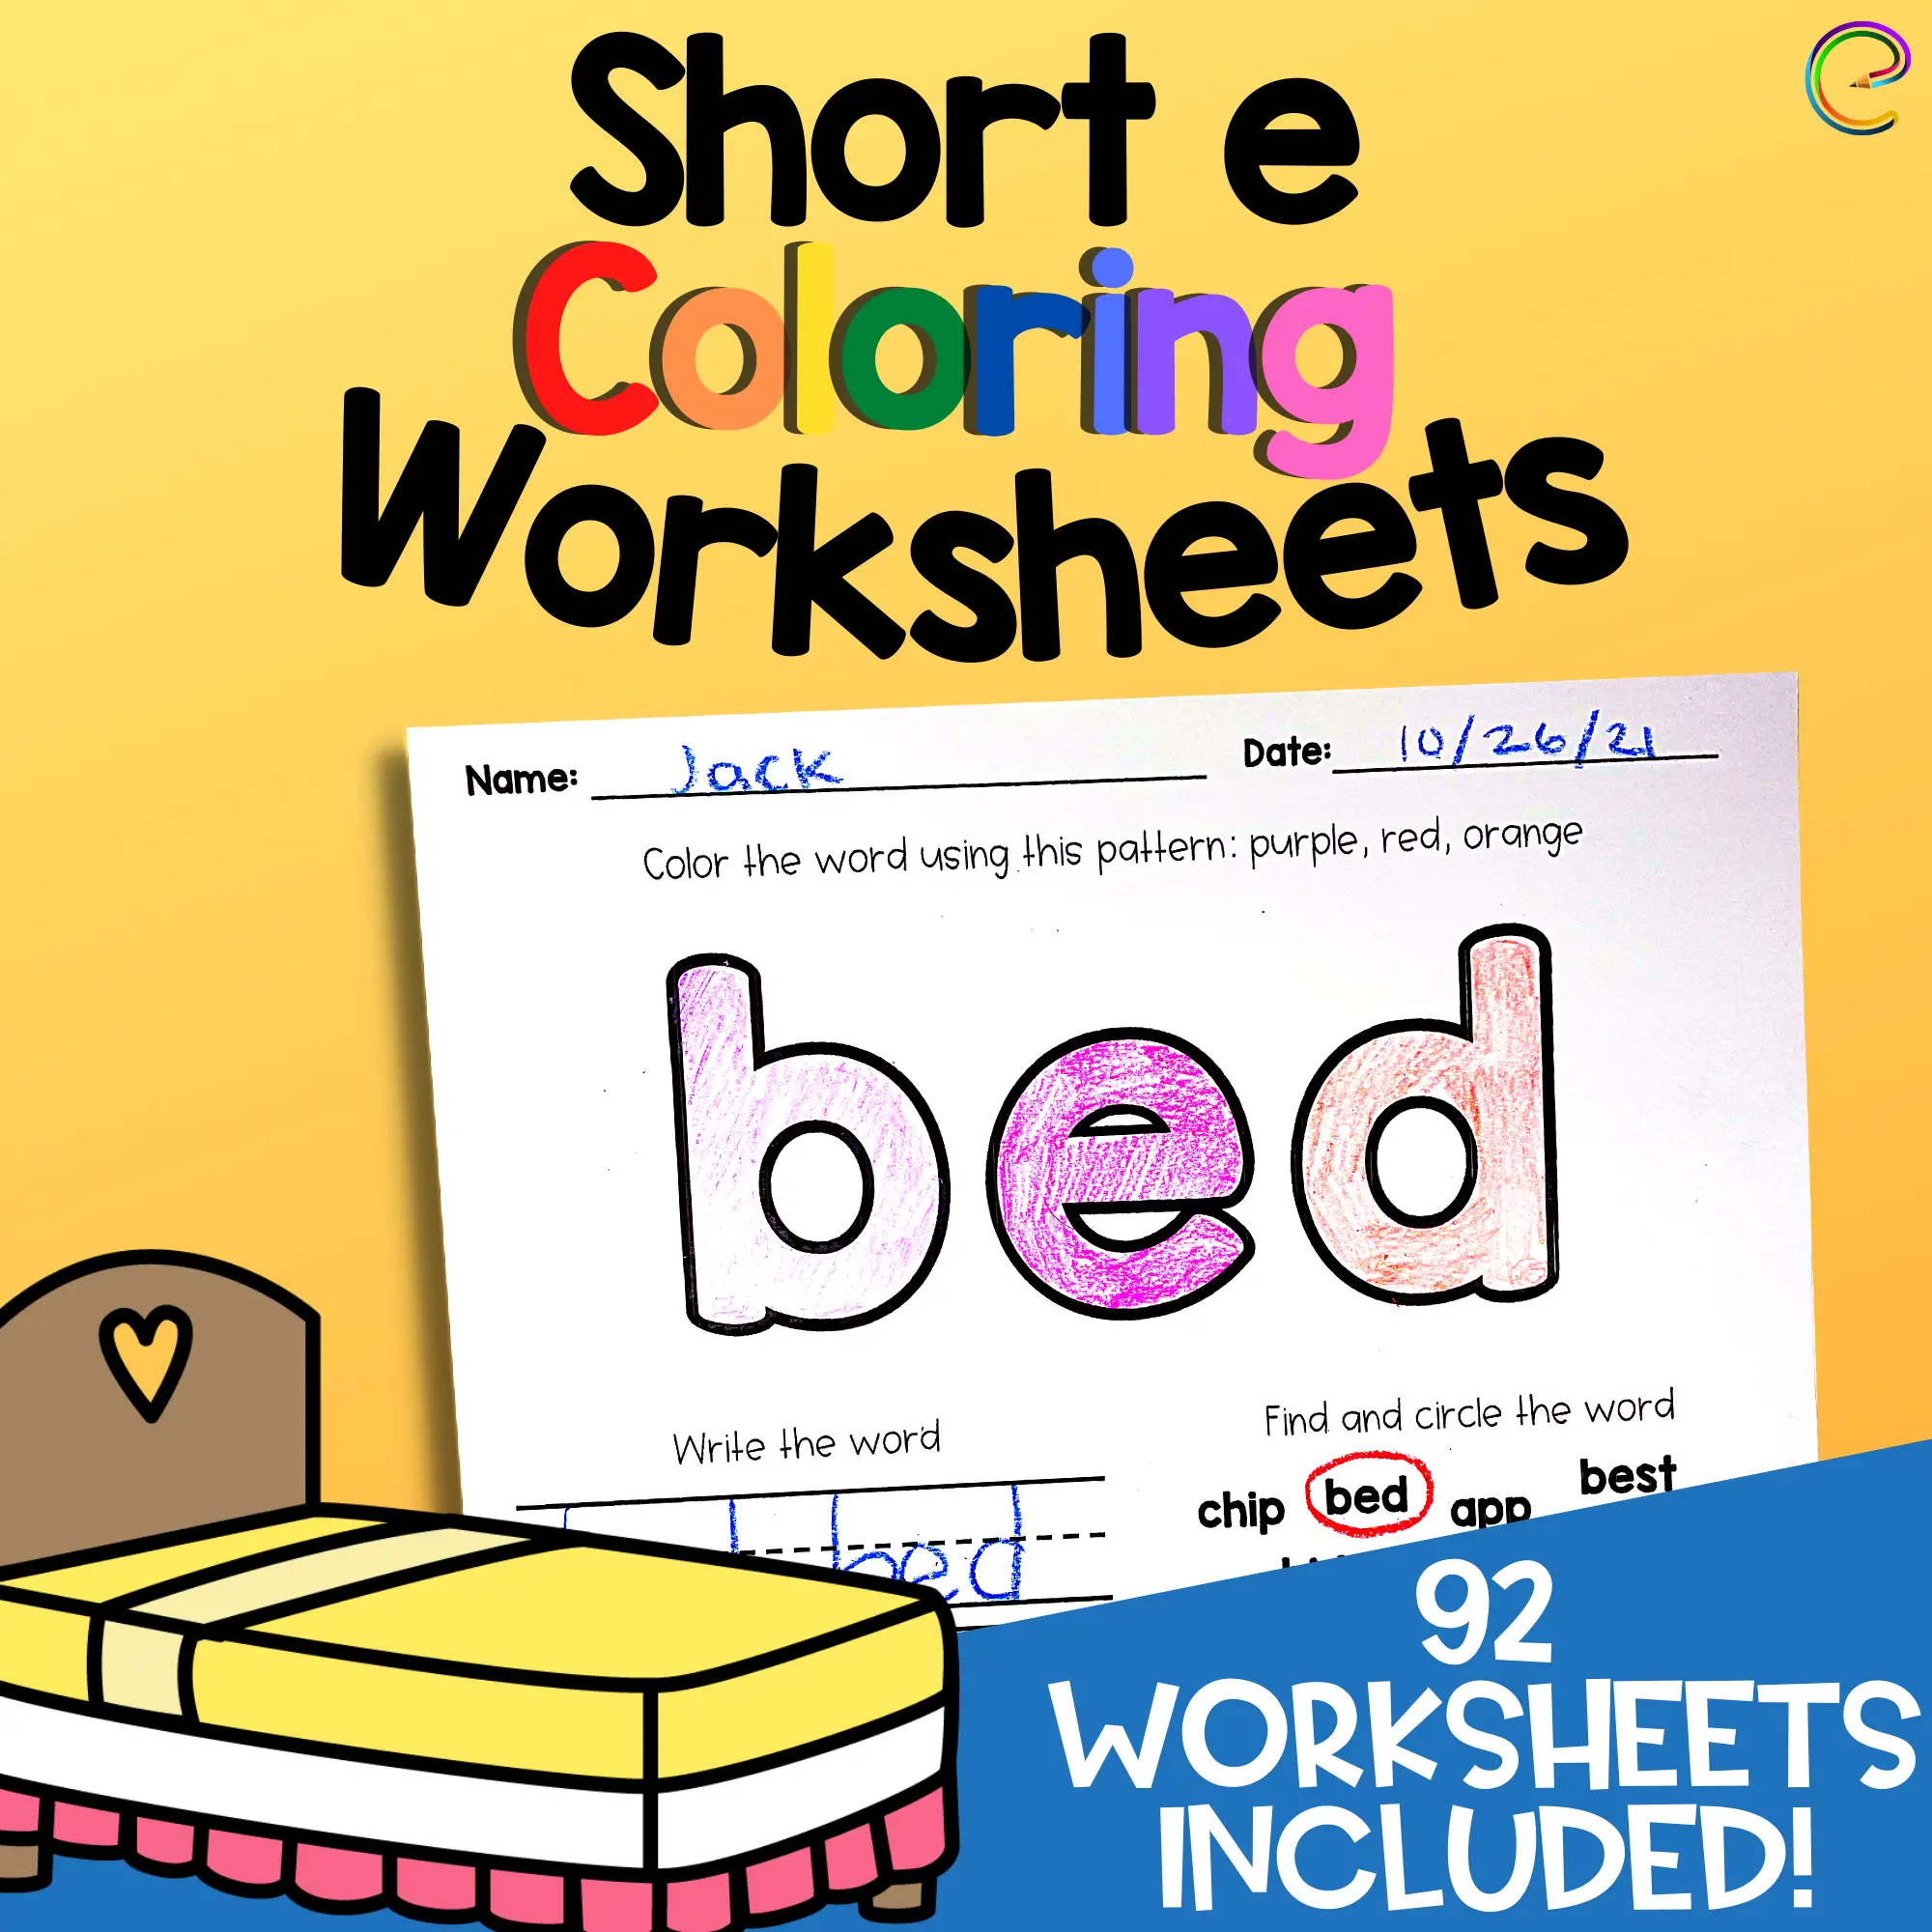 Short e coloring worksheets